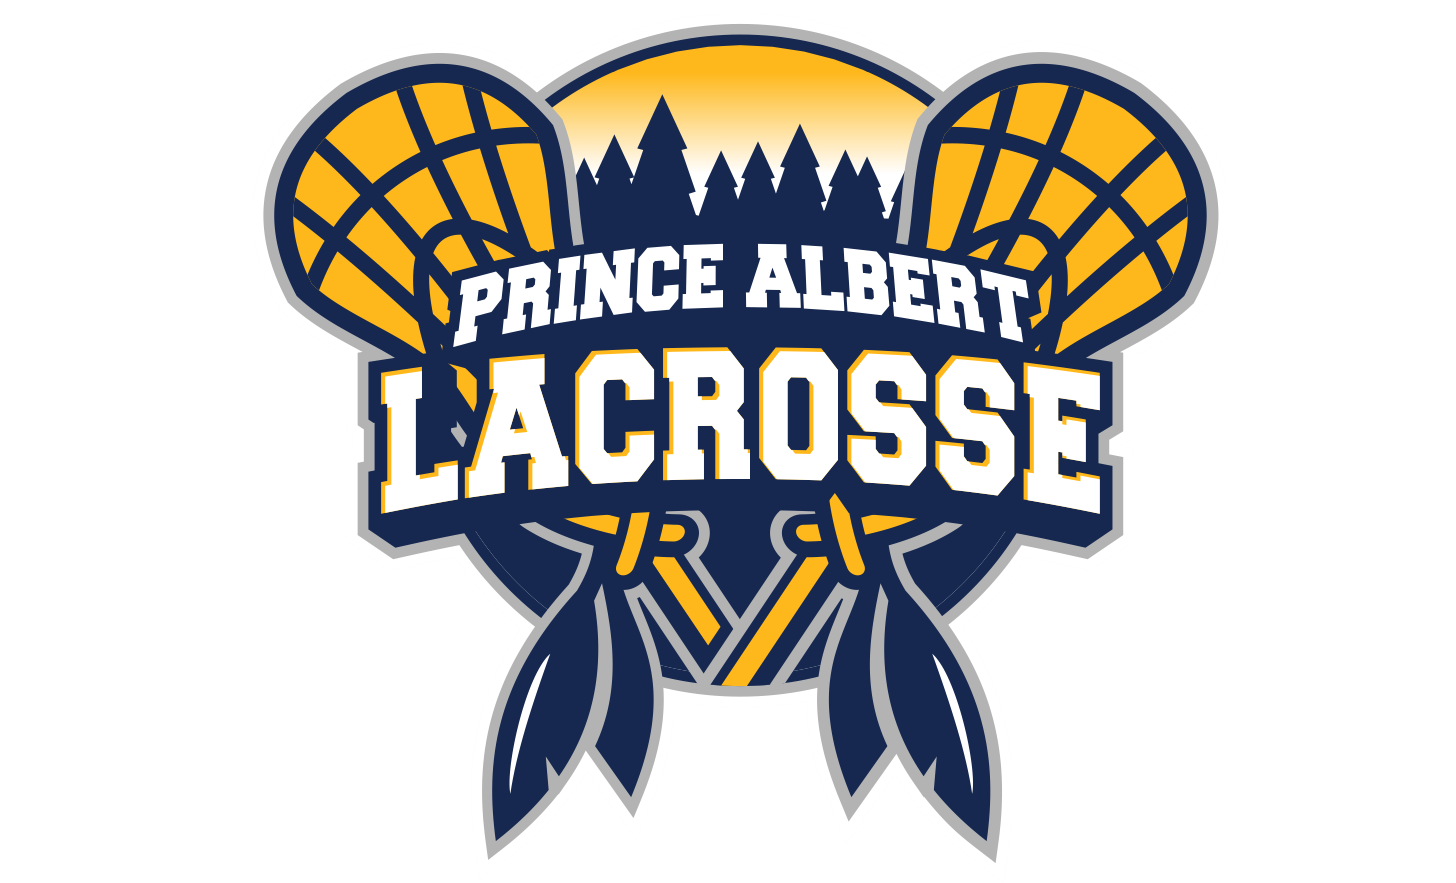 Prince Albert Lacrosse logo